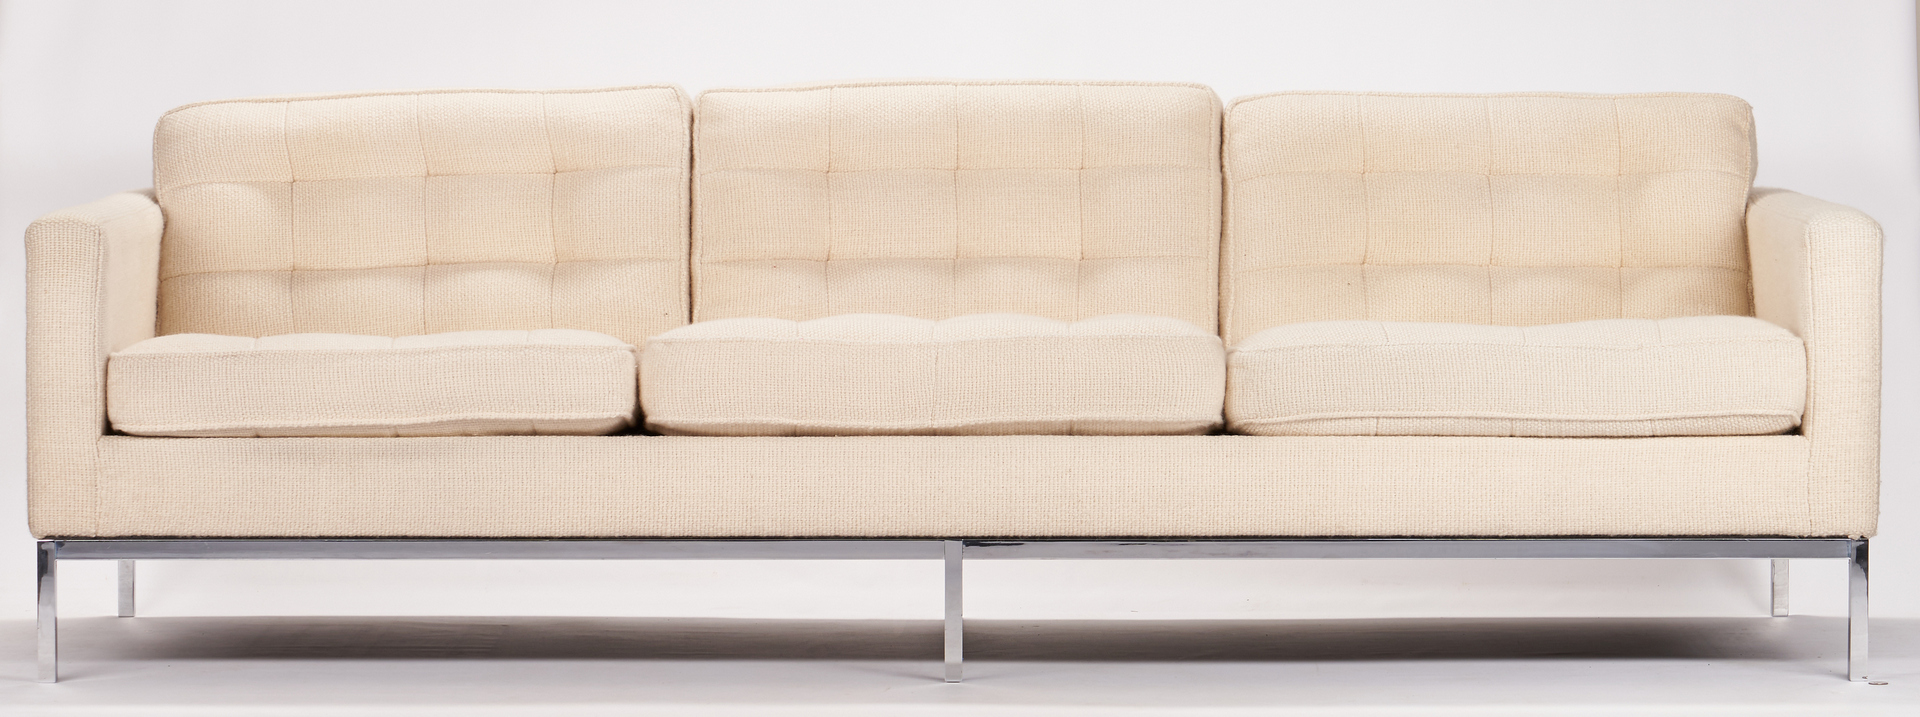 Lot 594: Mid-Century Knoll Parallel Bar System Sofa